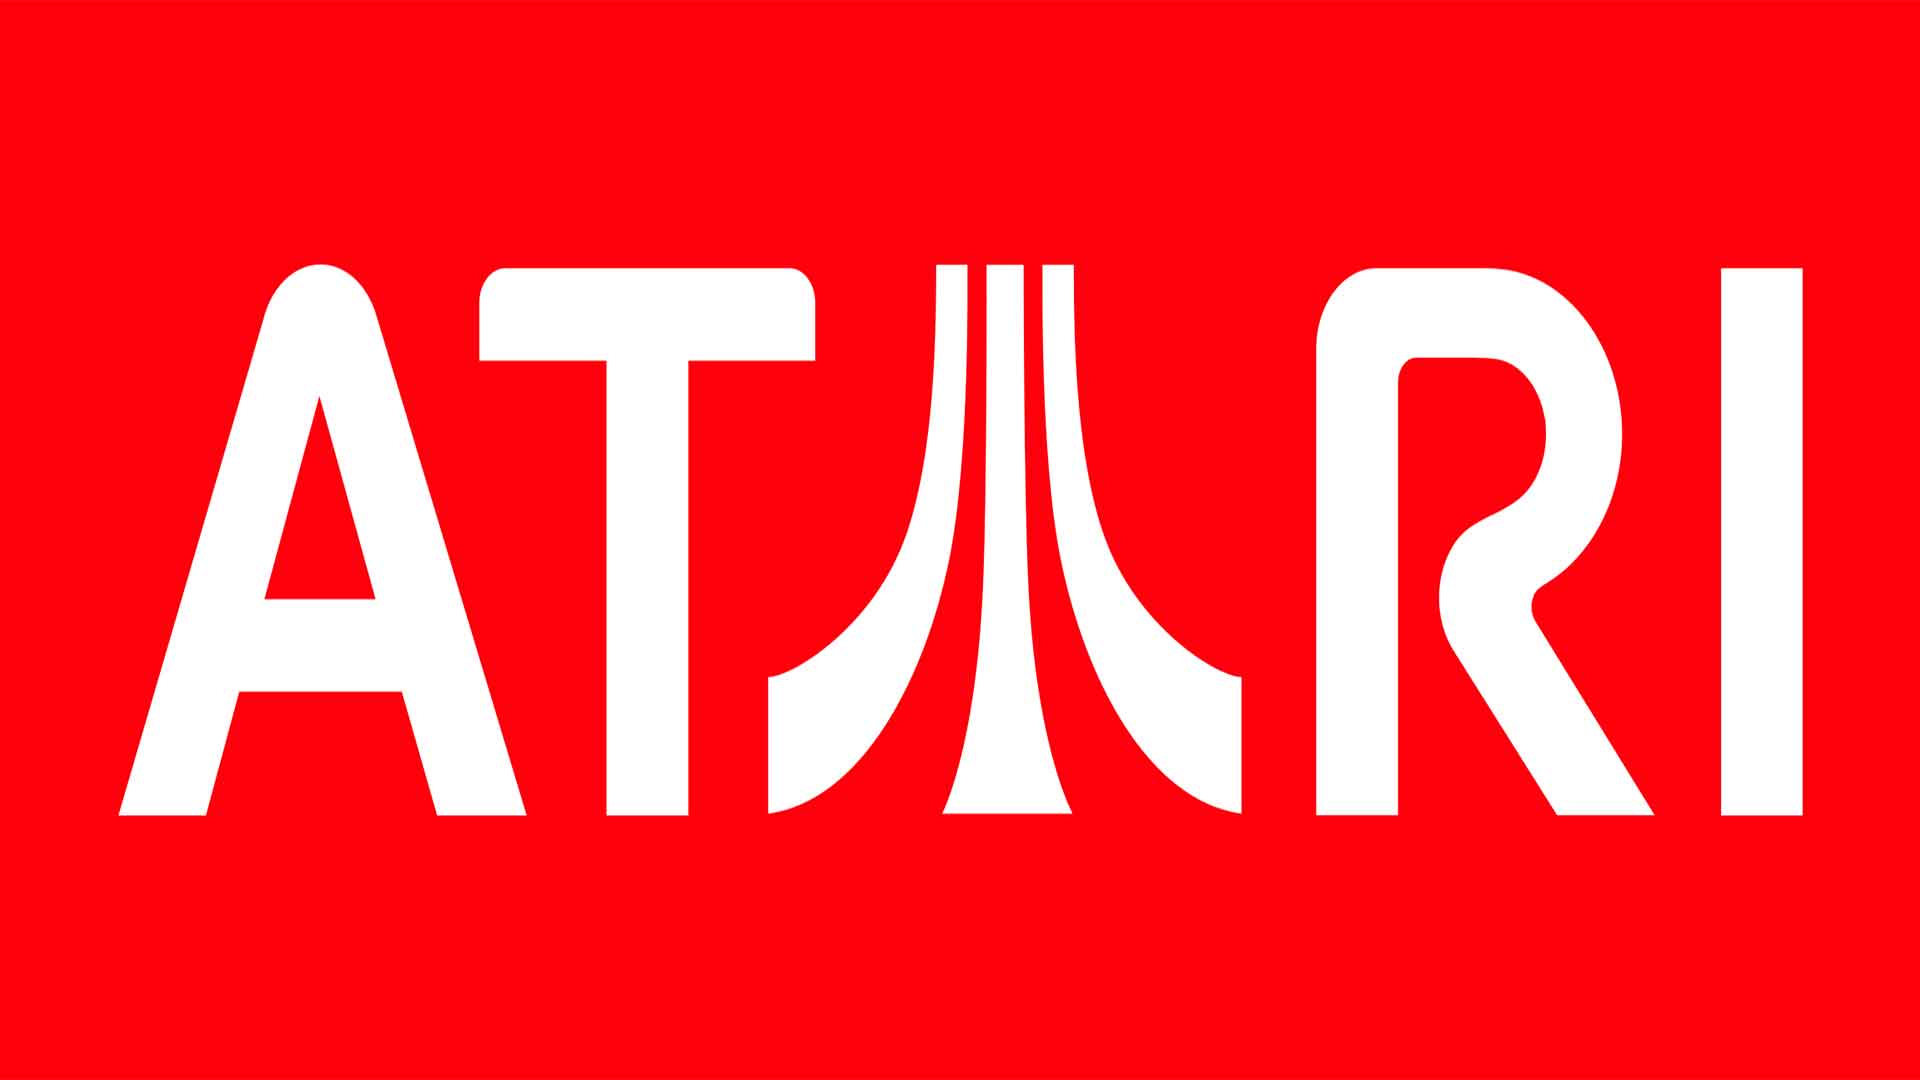 Was bedeutet der Name Atari?